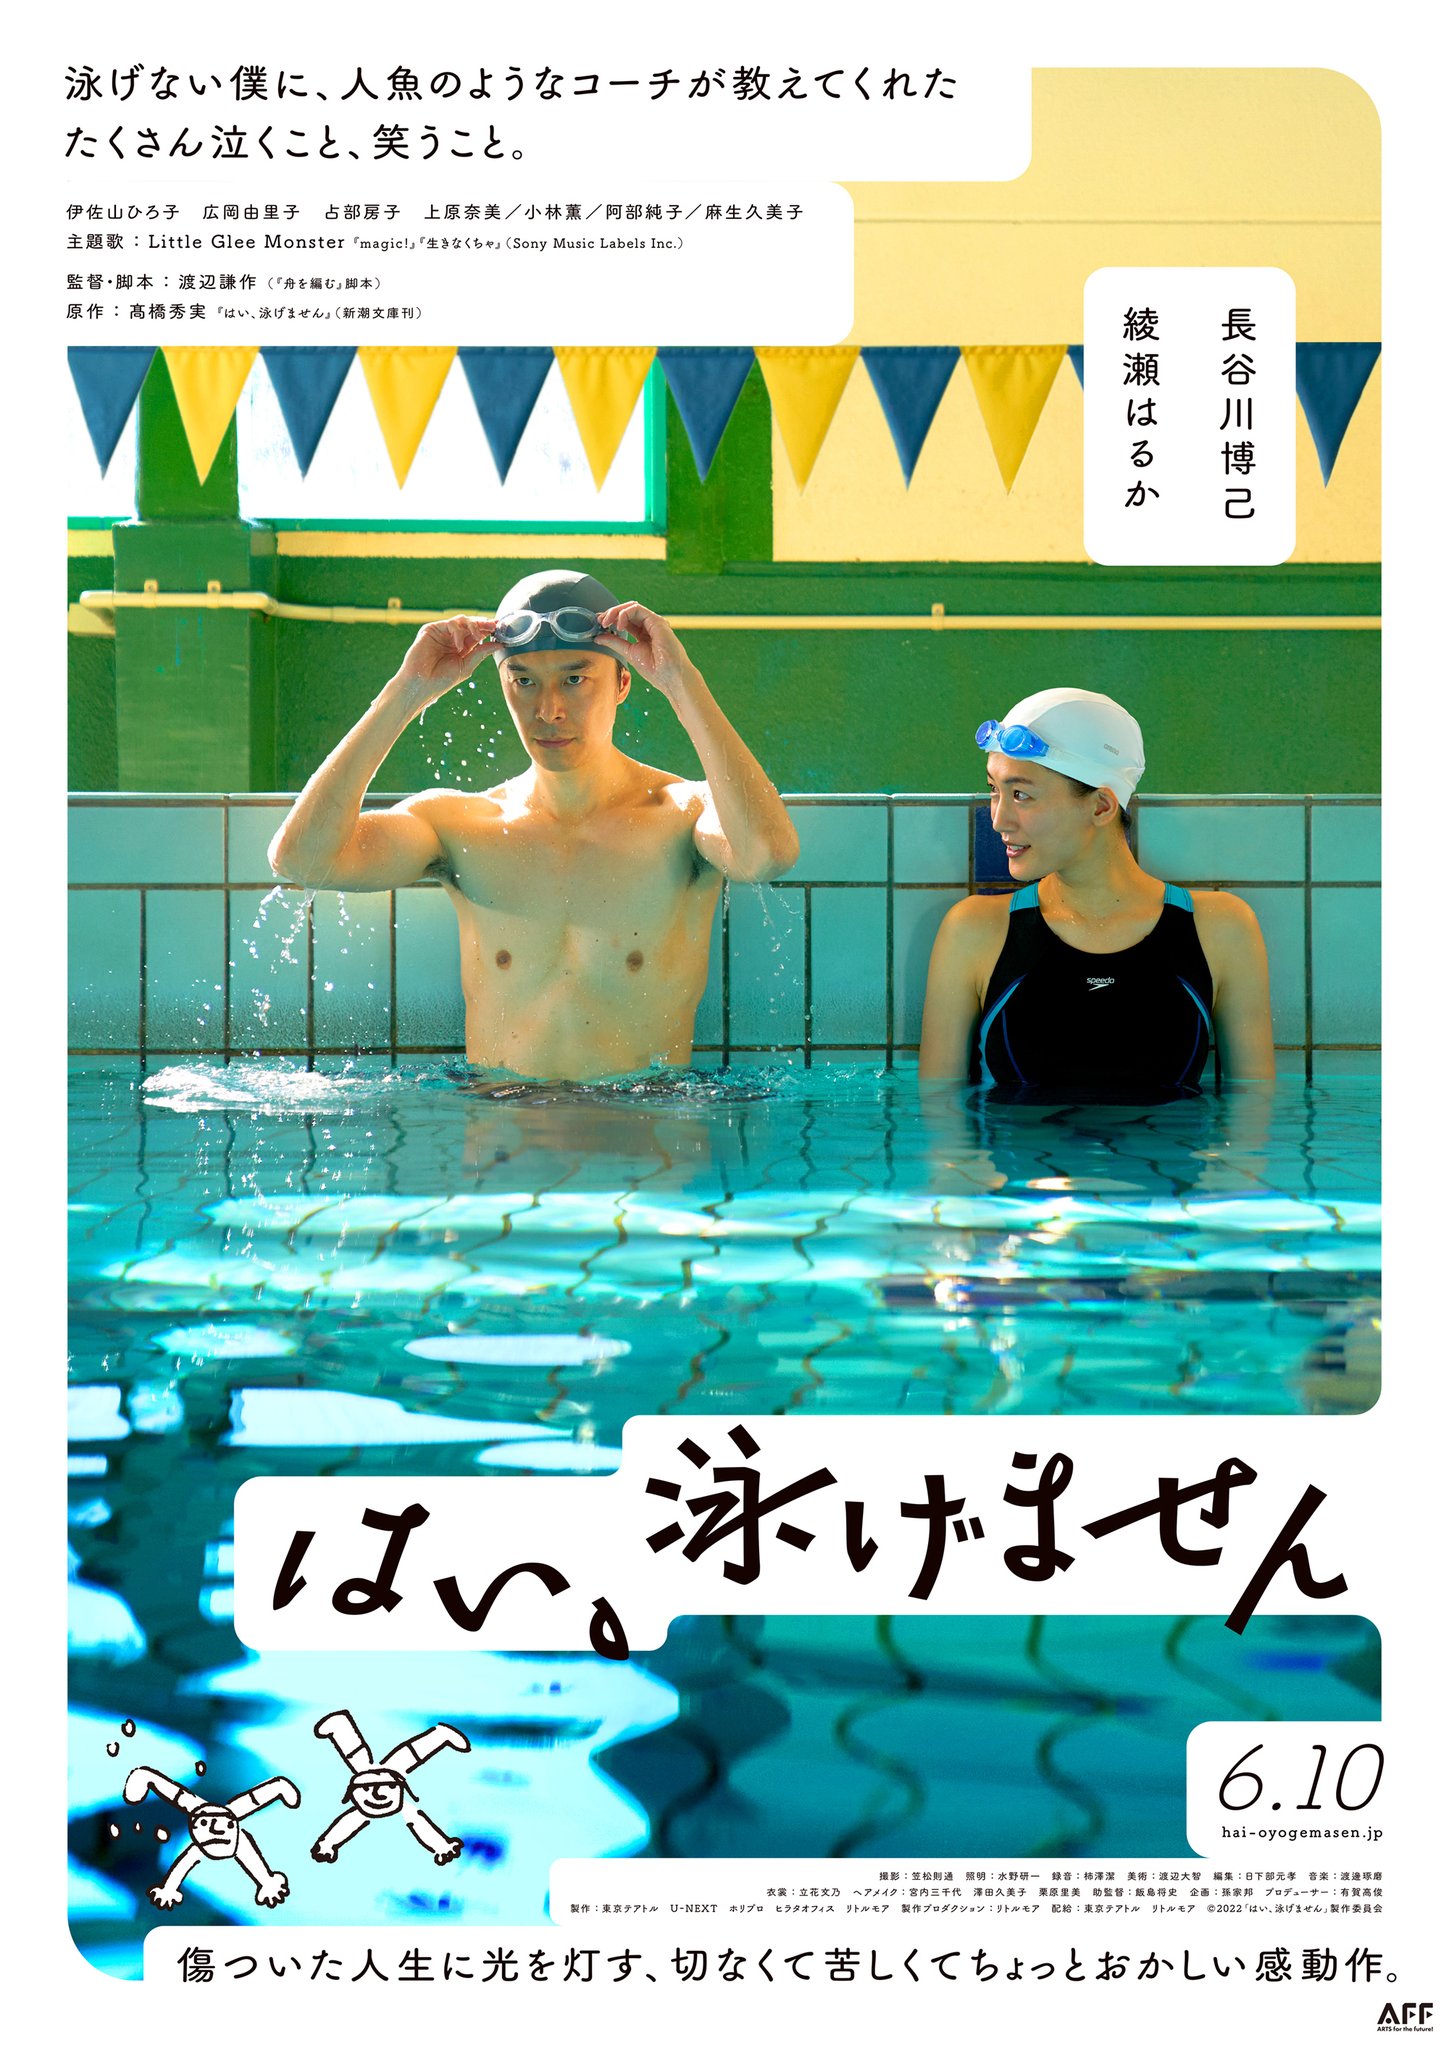 Yes I Can't Swim film - Kensaku Watanabe - poster